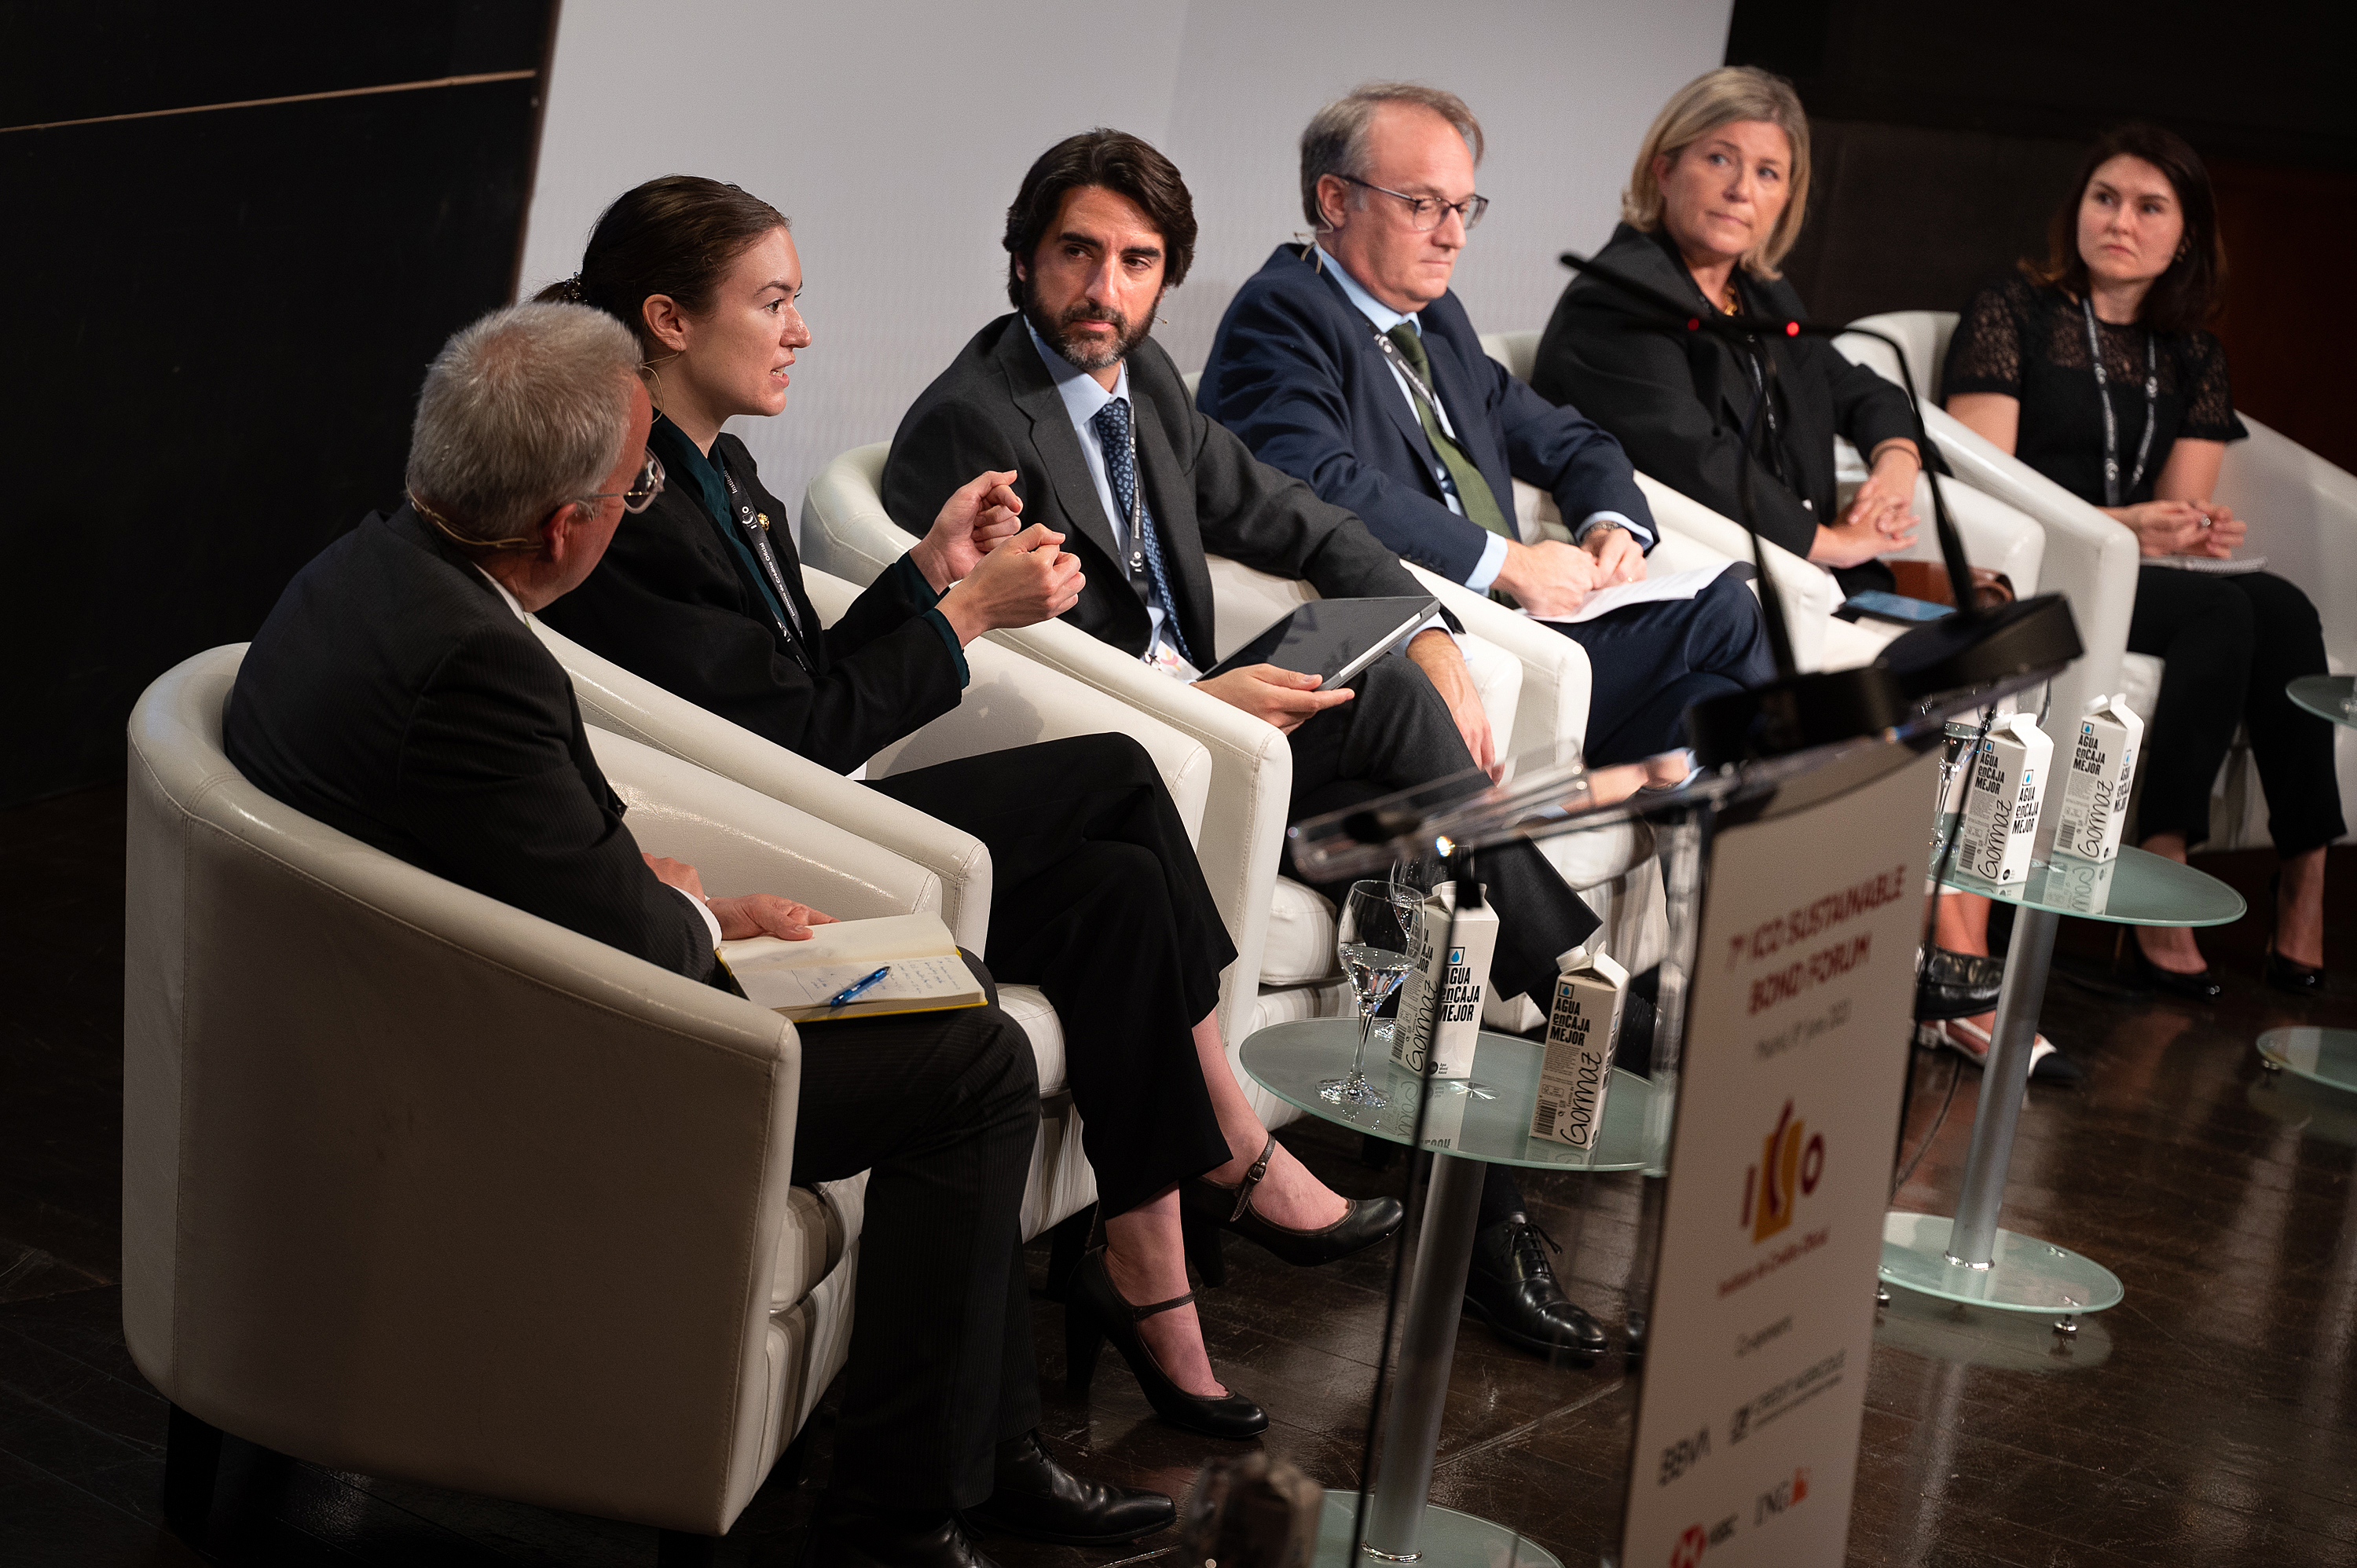 7th Sustainable ICO Bond Forum June 8, 2023 Madrid